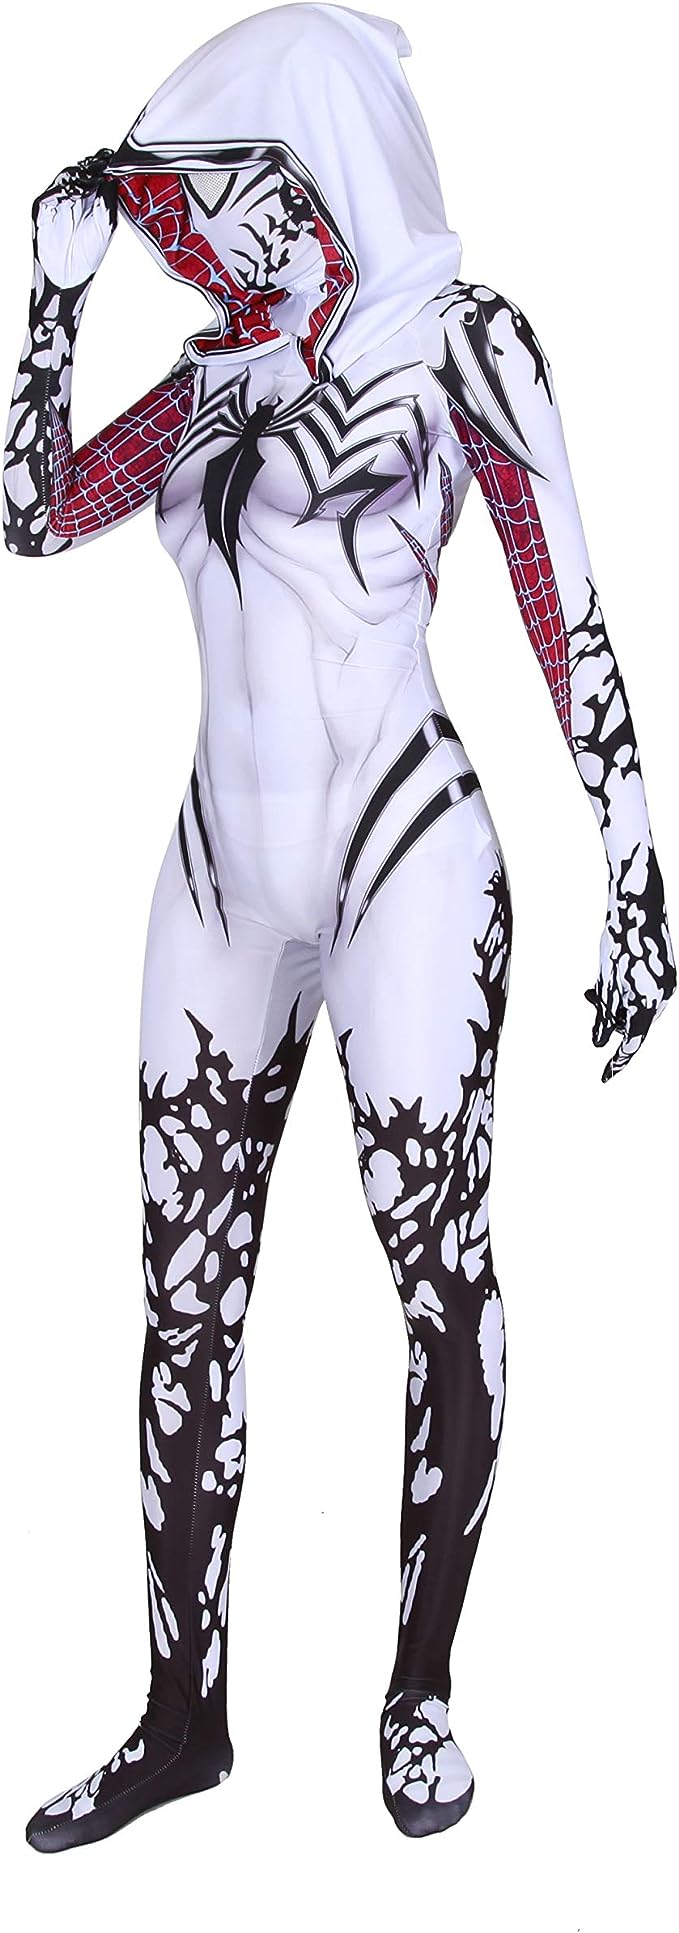 Gwen Stacy Cosplay Costume Into The Spider Verse Gwenom Spandex Fabric Halloween Superhero Bodysuit